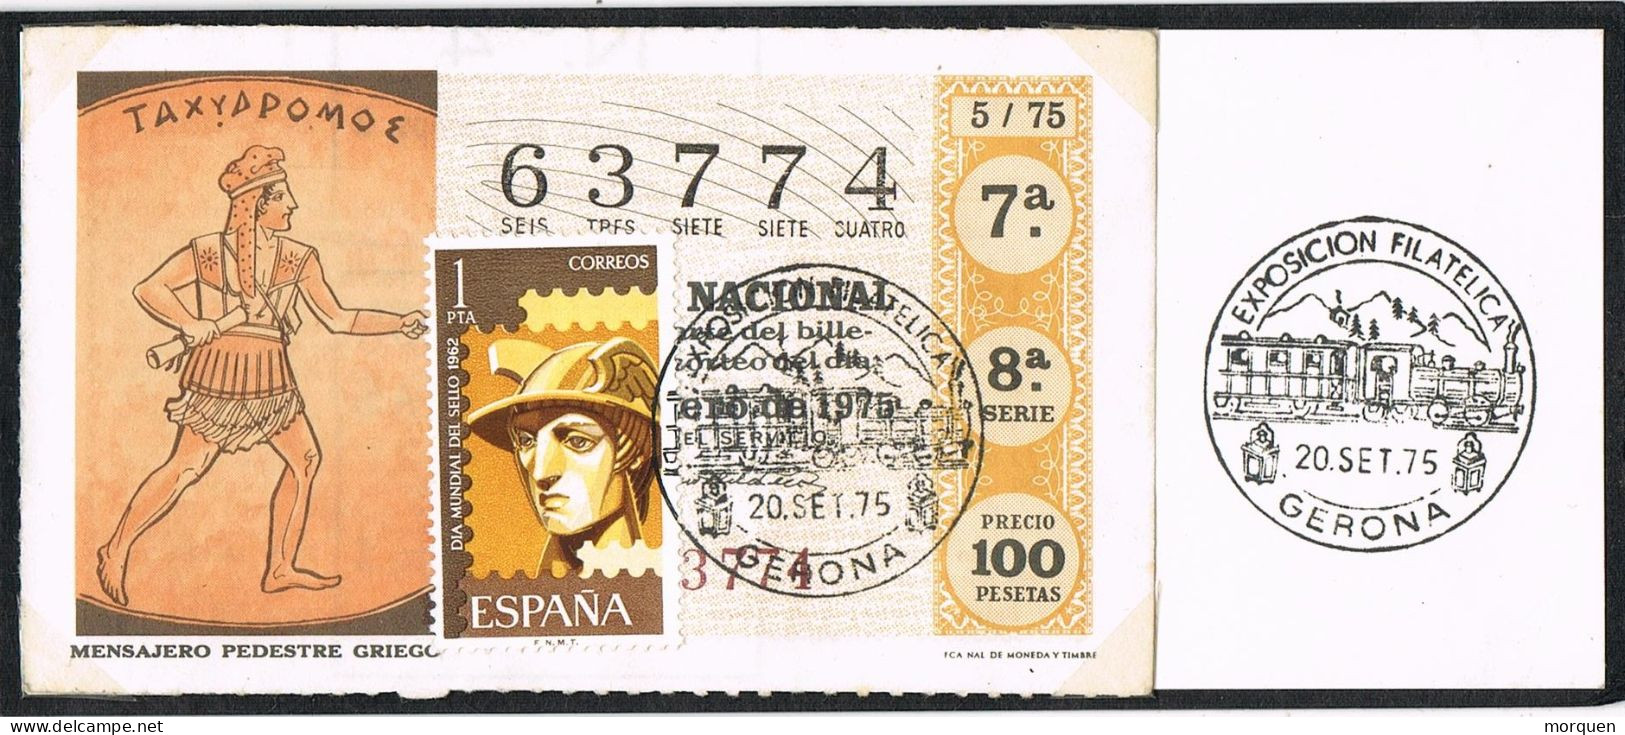 54578. Billete Loteria GERONA 1975. Ferrocarril, Matasellos Exposicion Filatelica. Tren - Briefe U. Dokumente